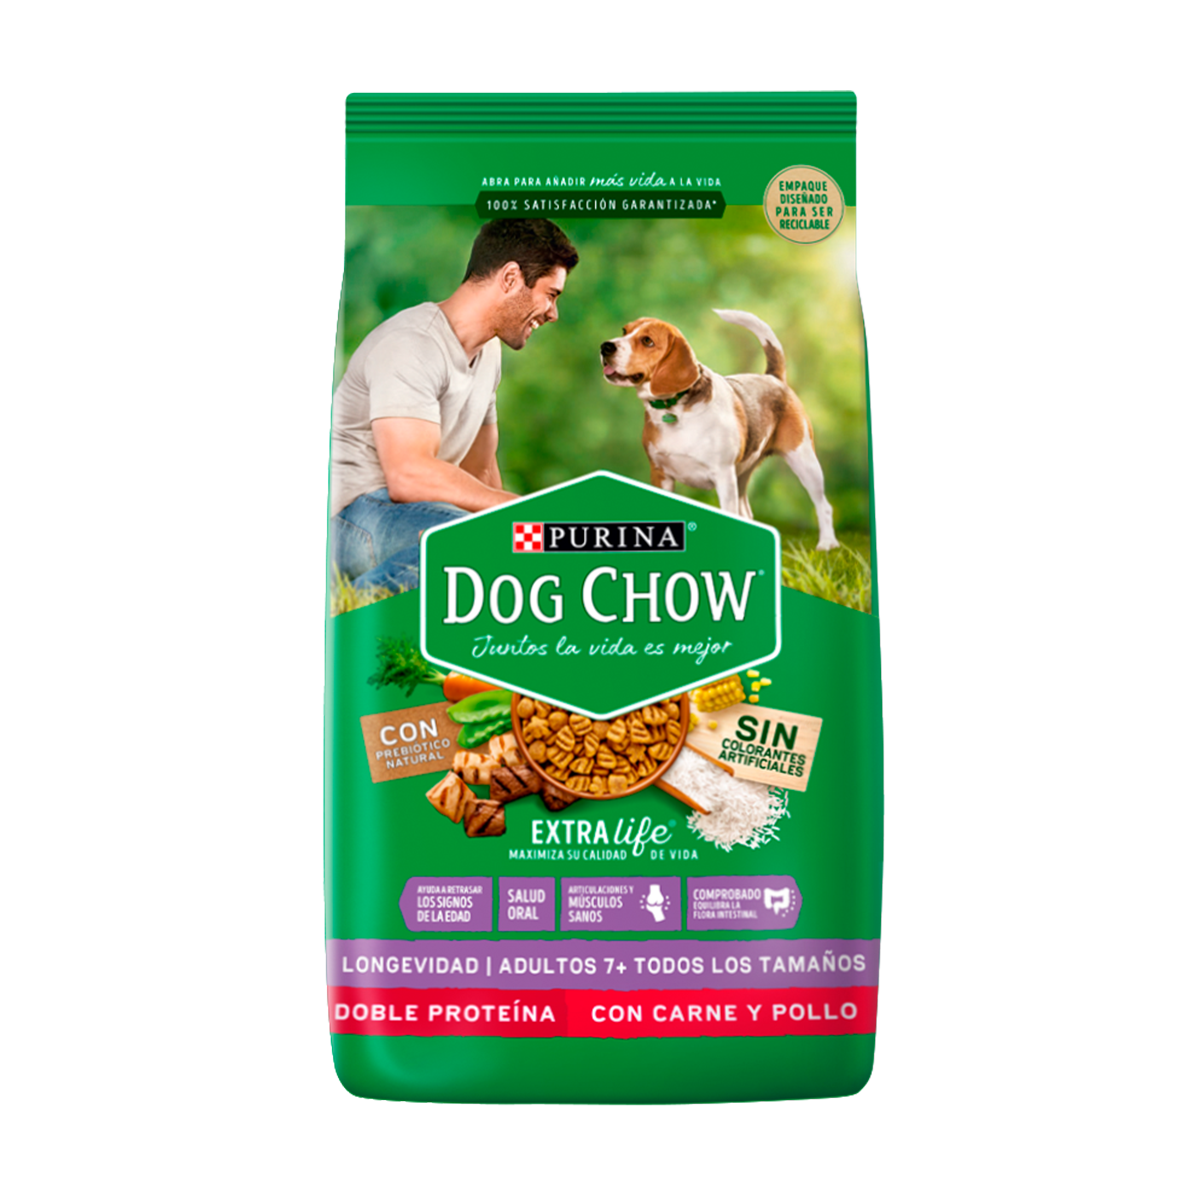 dog-chow-adulto%2B7-longevidad-carne-pollo-front.png